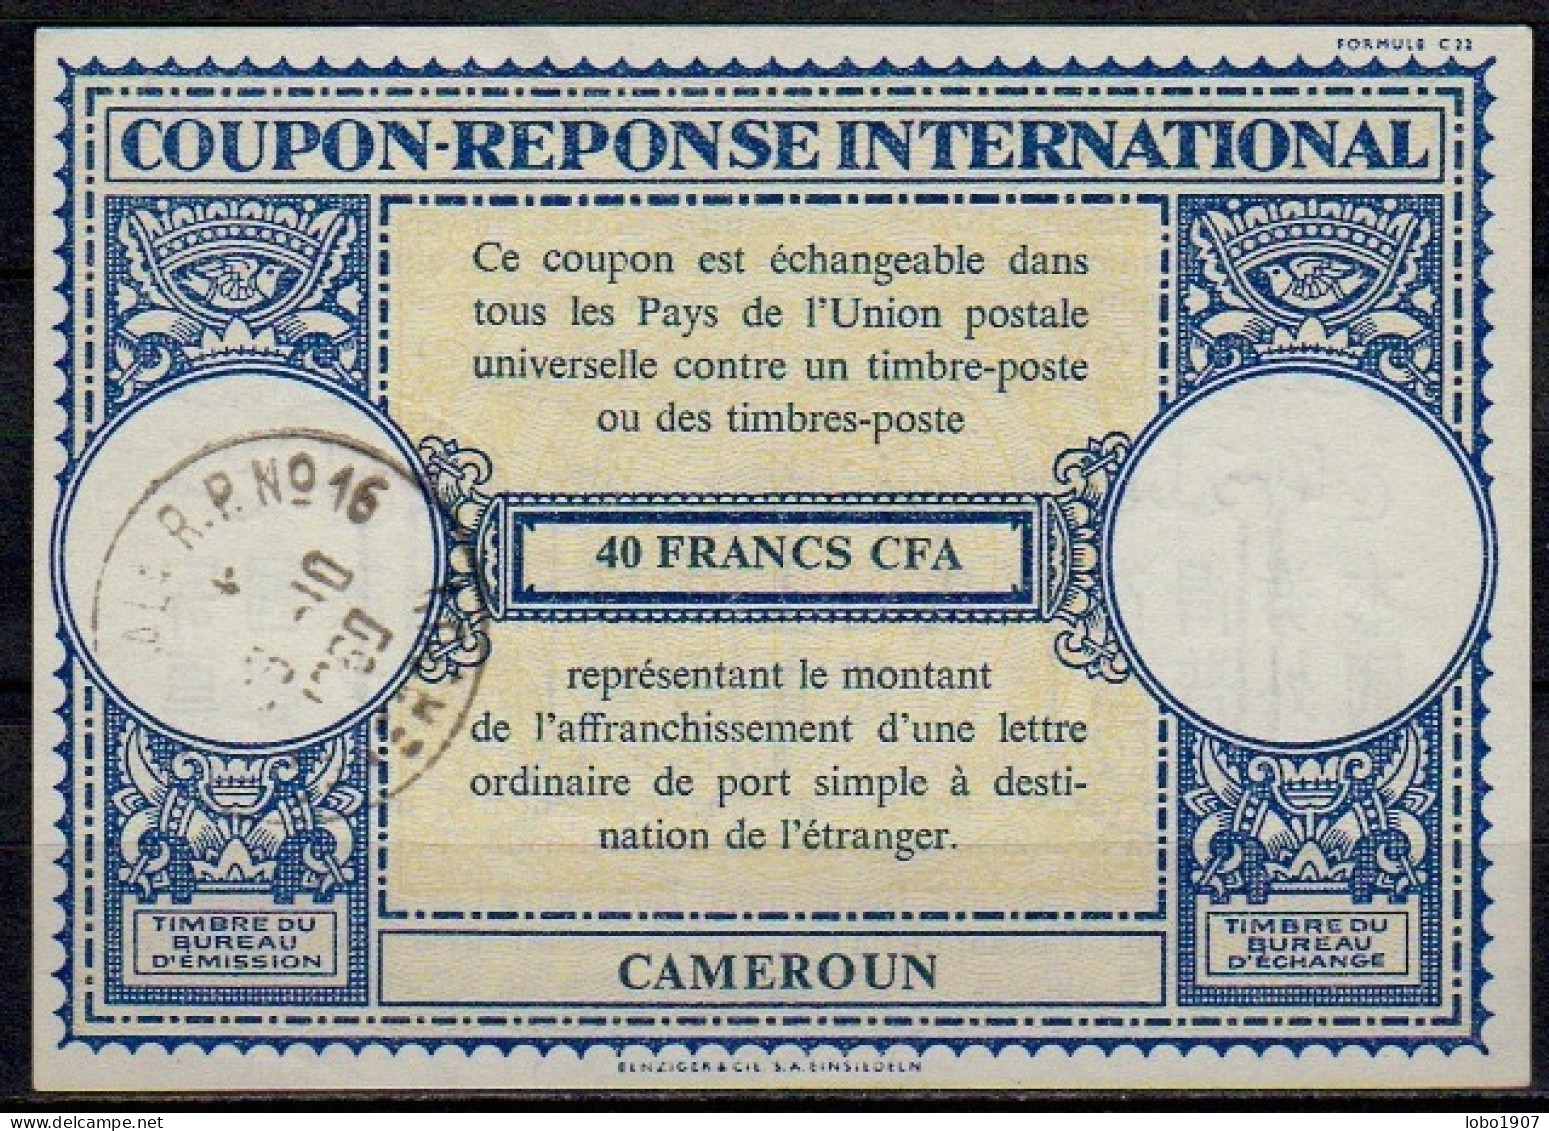 CAMEROUN, CAMEROON  Lo16n  40 FRANCS Int. Reply Coupon Reponse Antwortschein IRC IAS Cupon Respuesta  DOUALA 29.10.60 - Camerun (1960-...)